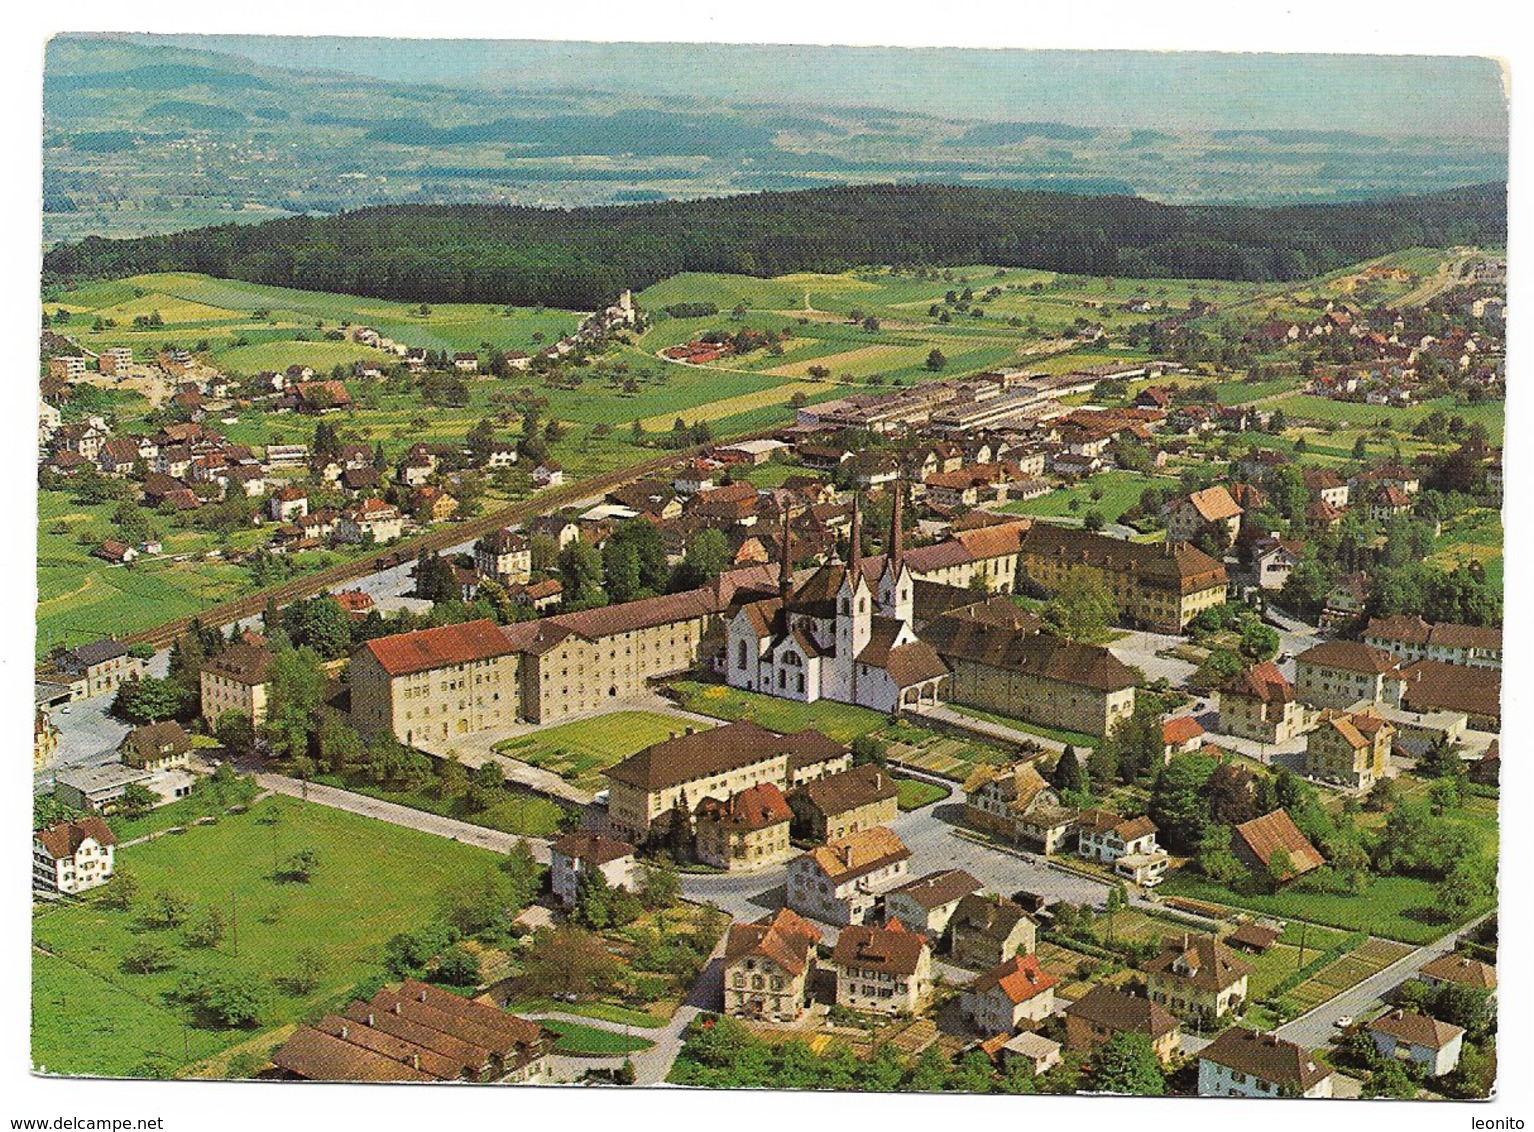 MURI AG Benediktinerabtei Kloster 1027 Flugaufnahme - Muri